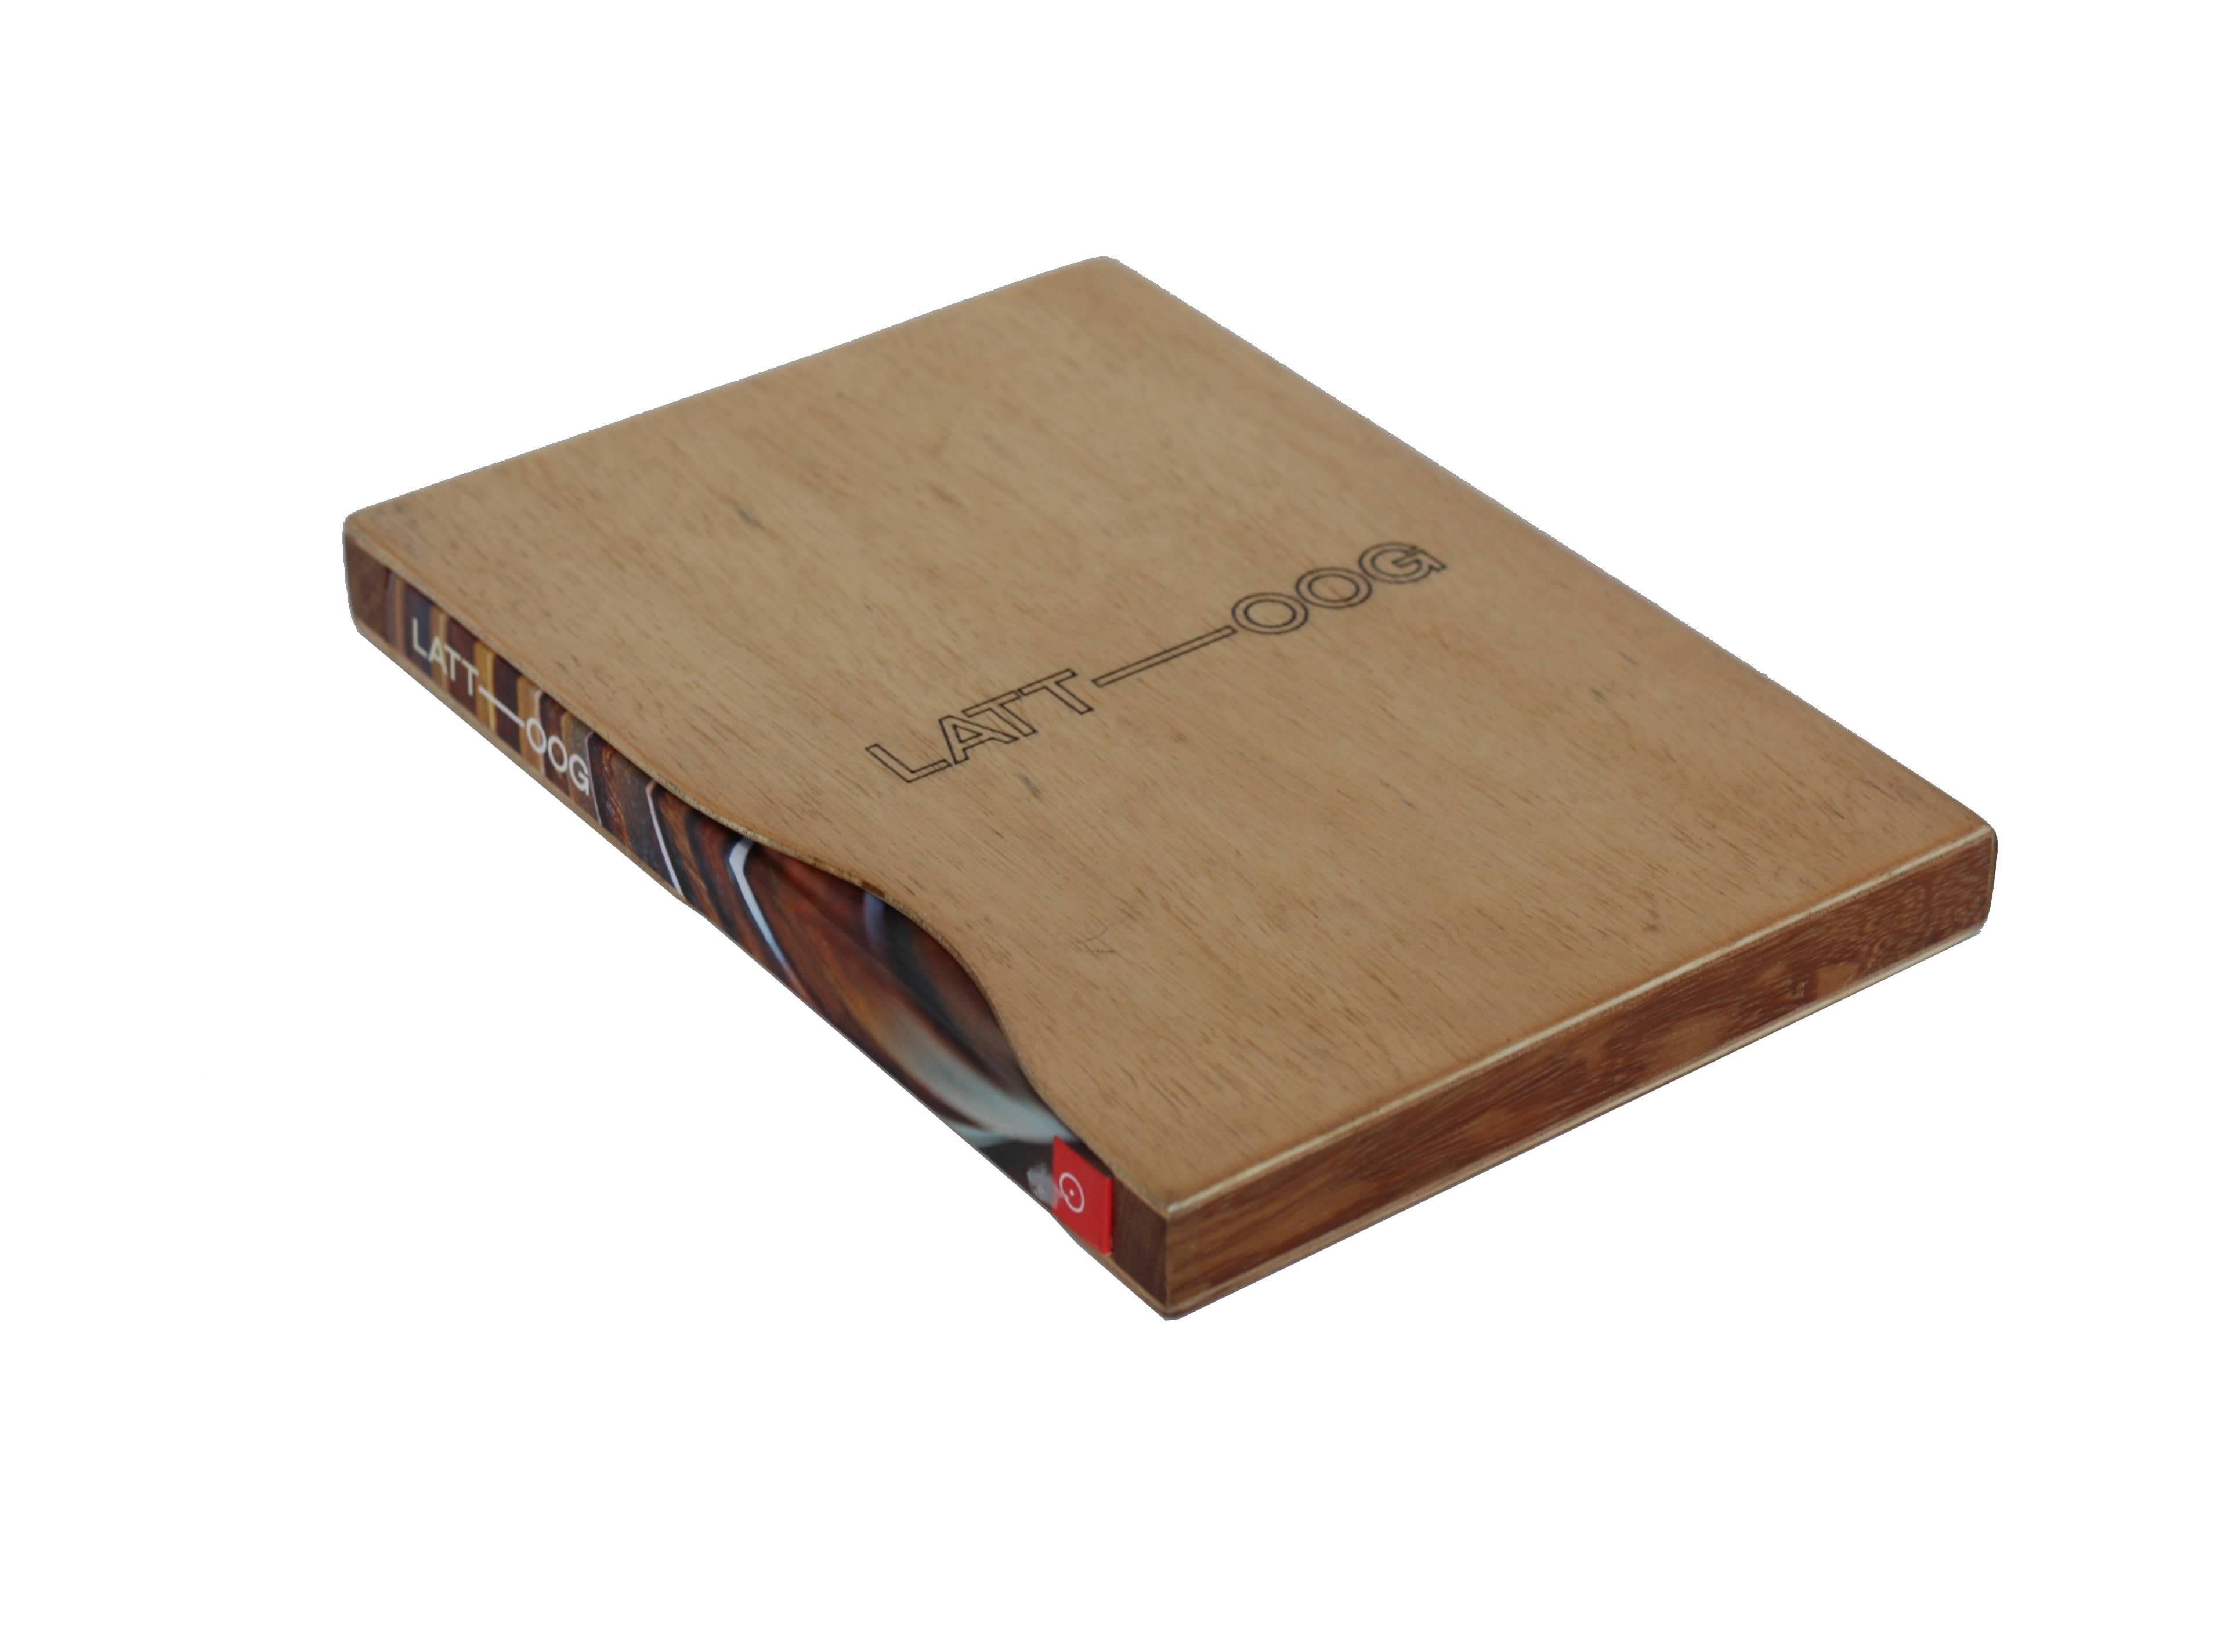 Brazilian Latt-Oog, Lattoog Book with Wood Cover